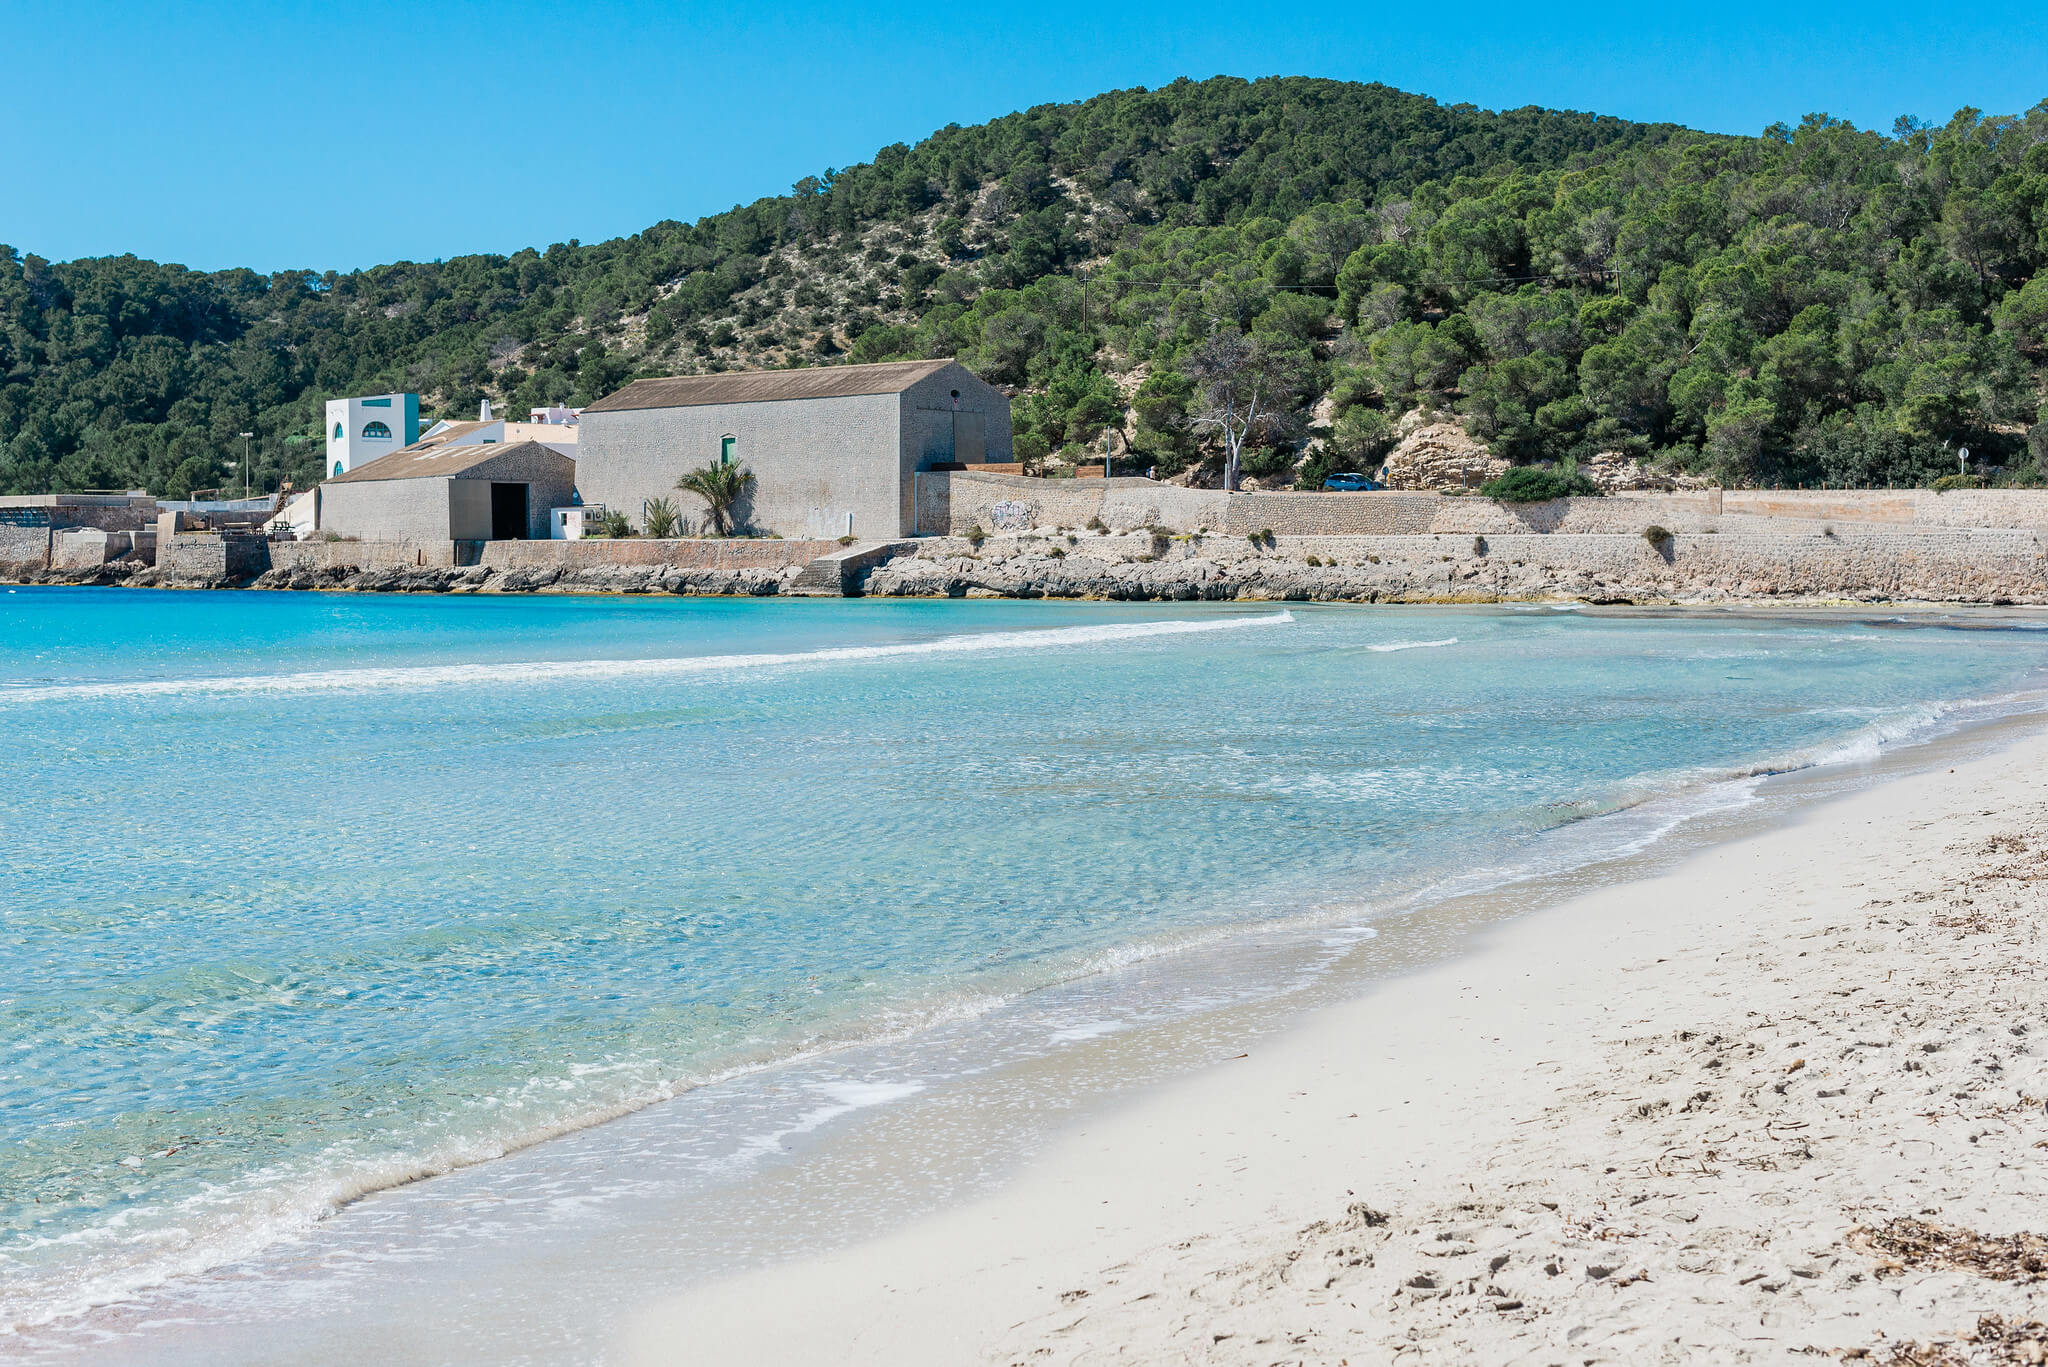 Las Salinas is one of the most beautiful beaches in Ibiza - Ibiza Villa